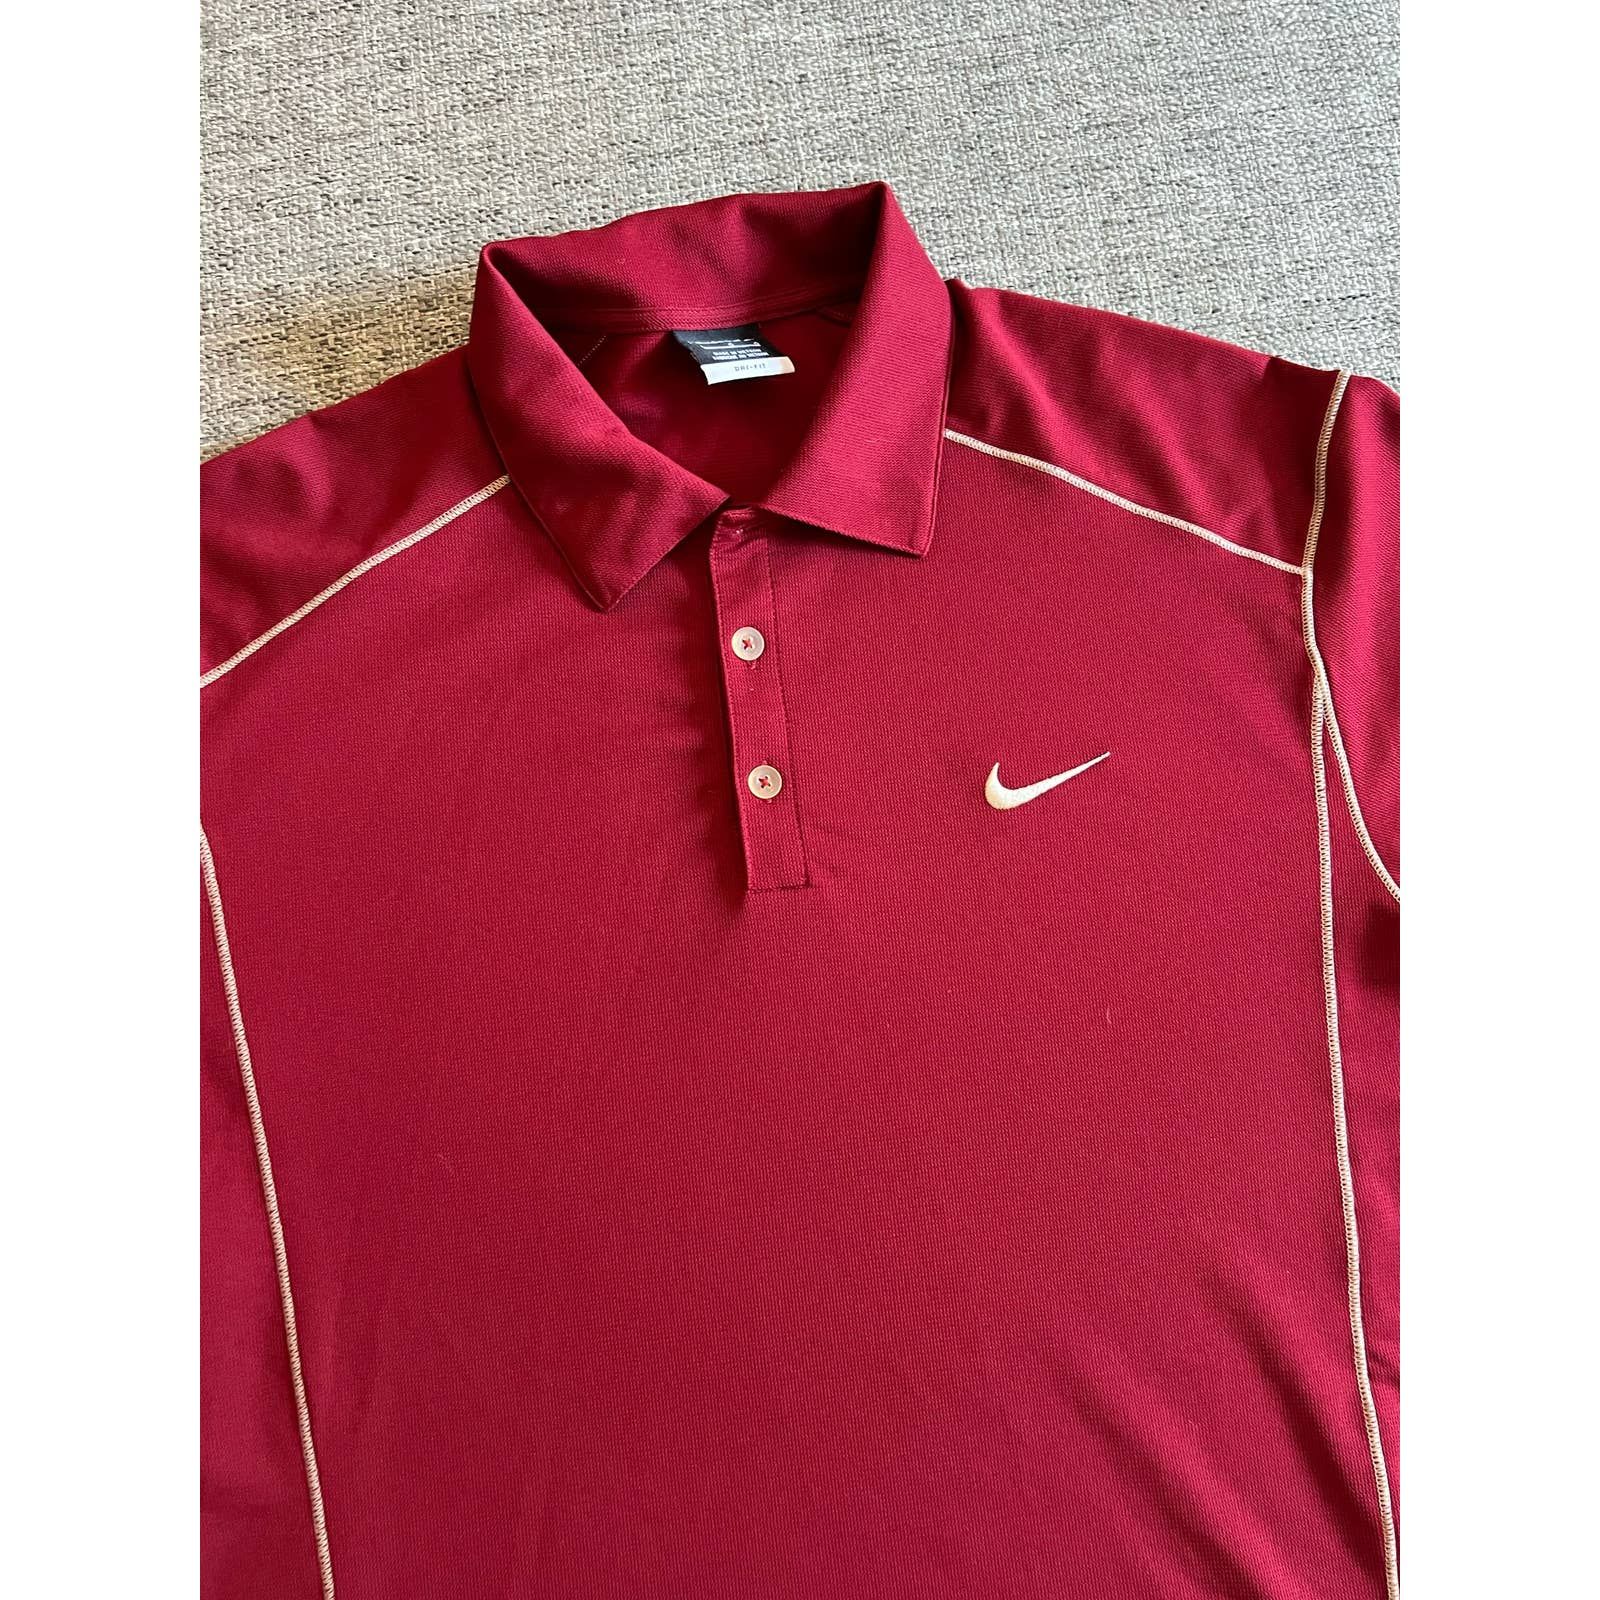 Nike Nike Golf Large maroon polo no logo Size US L / EU 52-54 / 3 - 5 Thumbnail